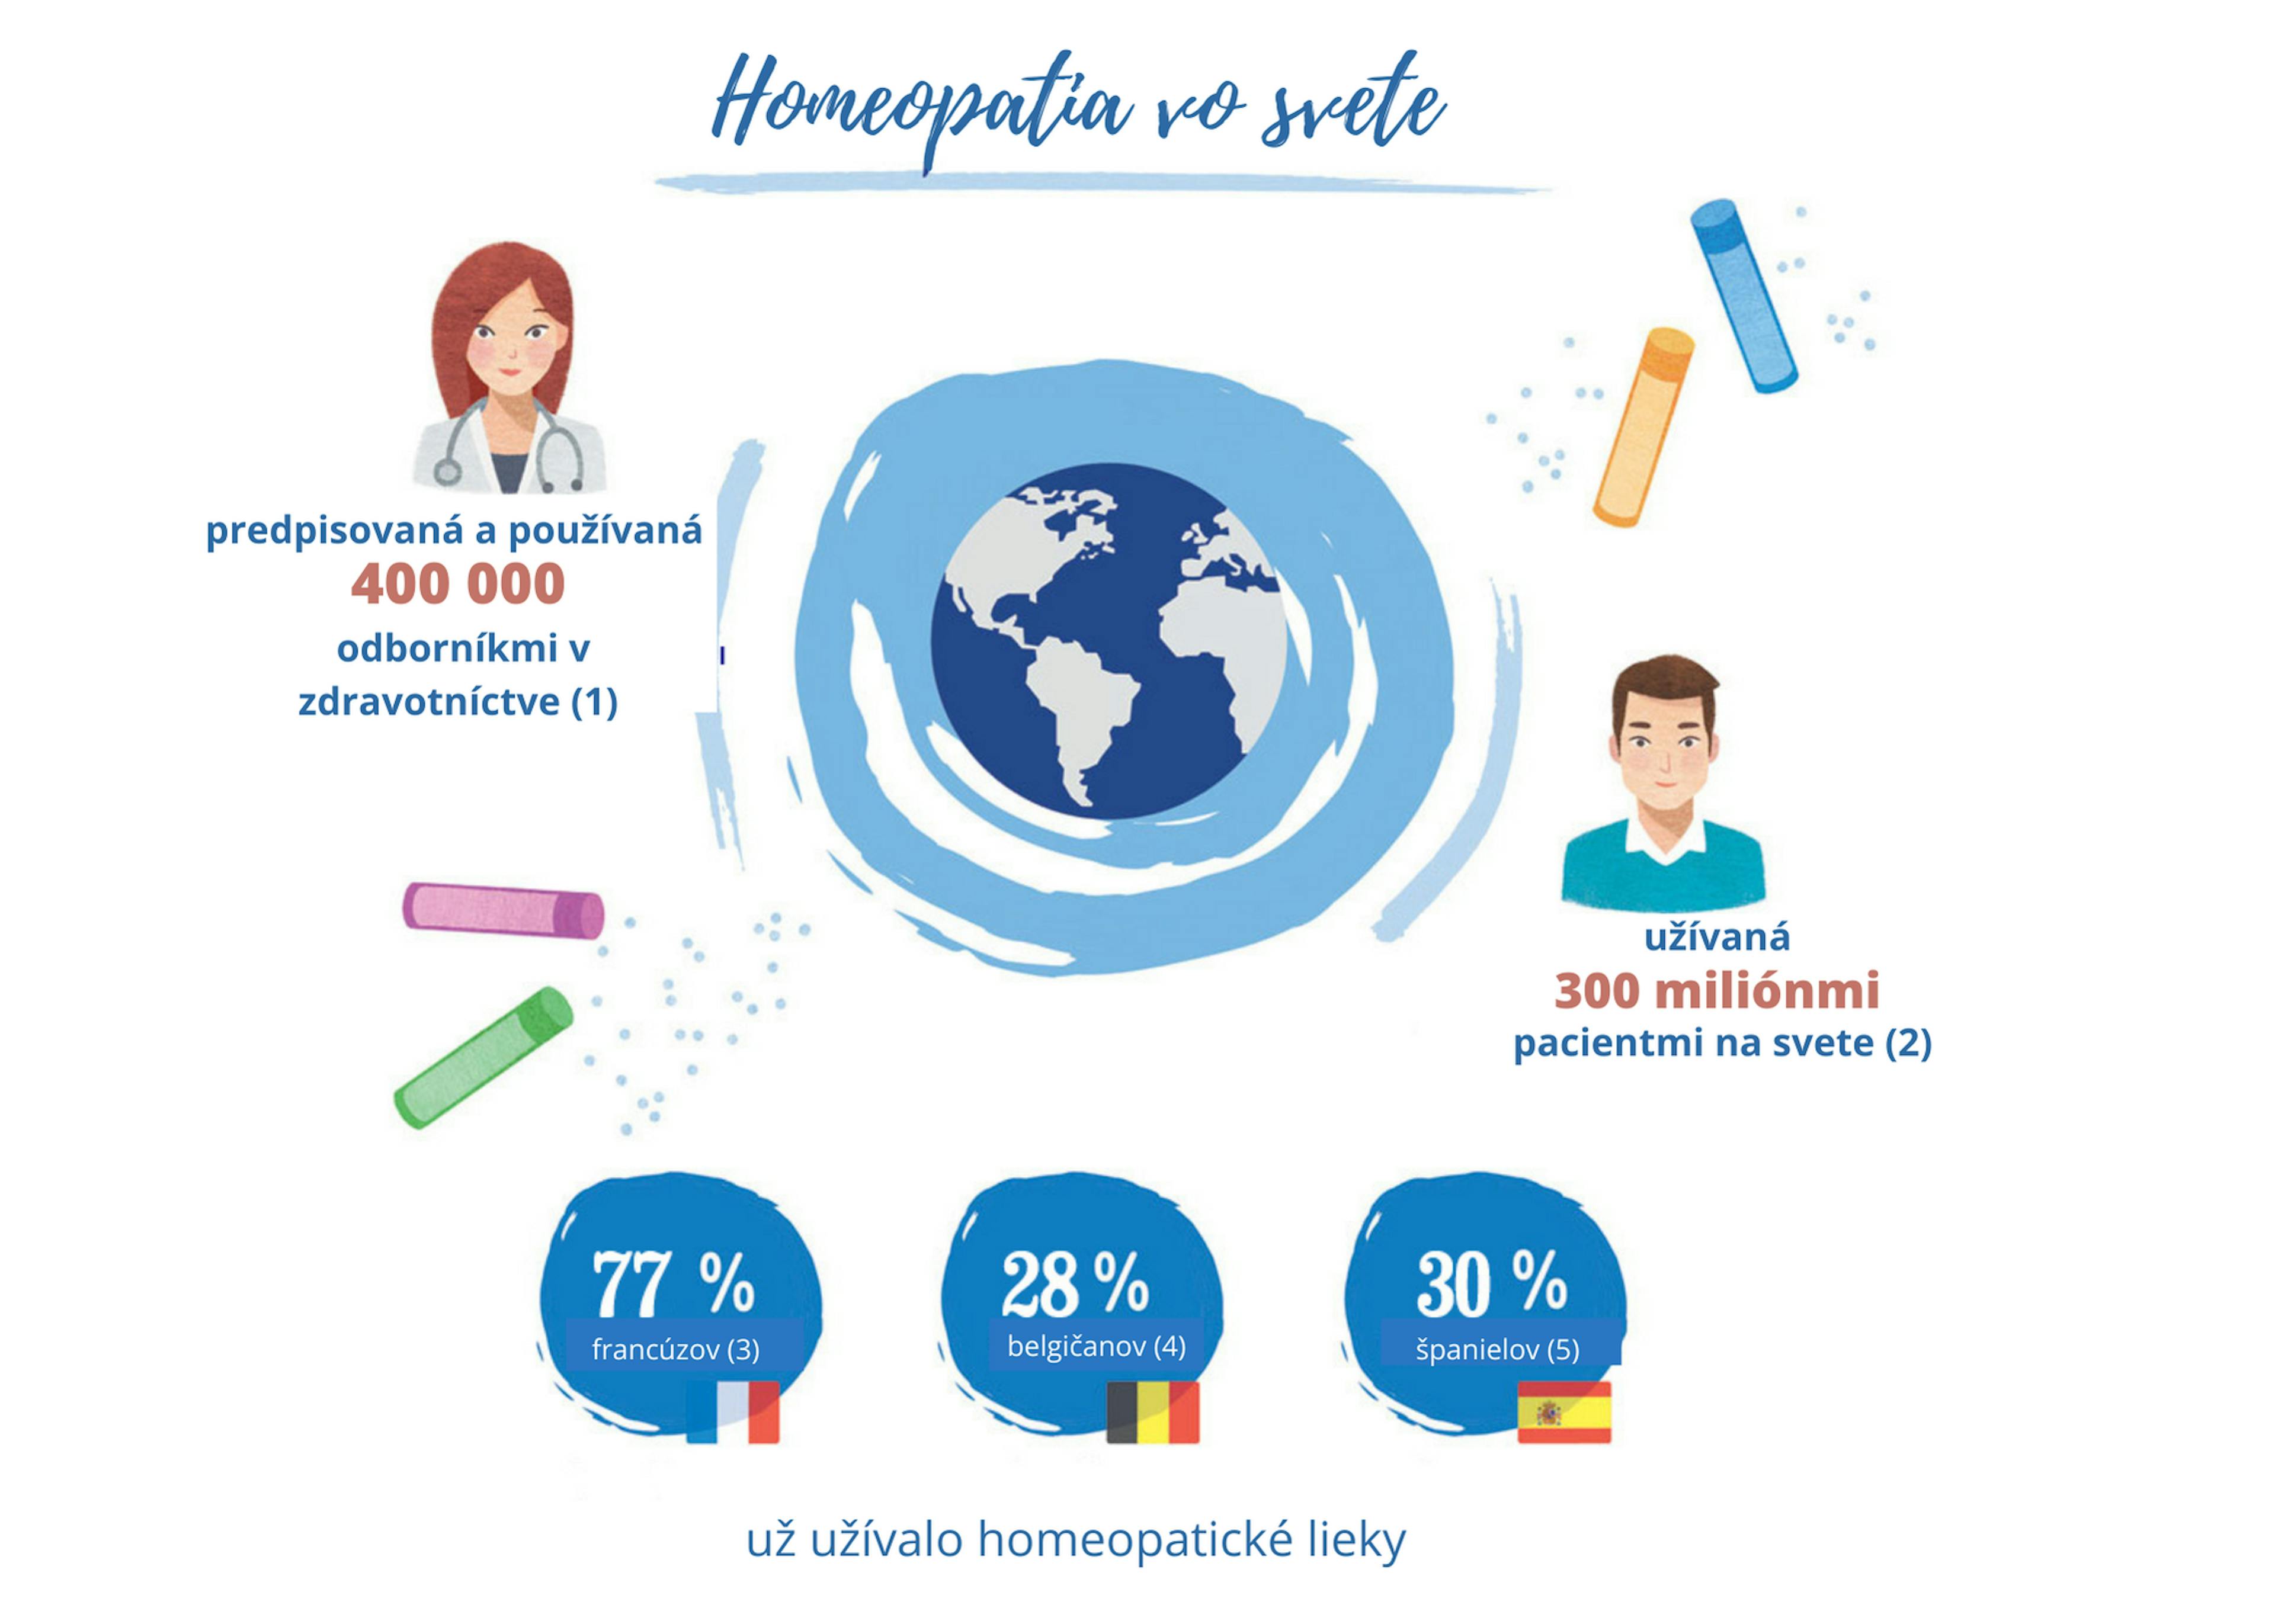 Homeopatia vo svete